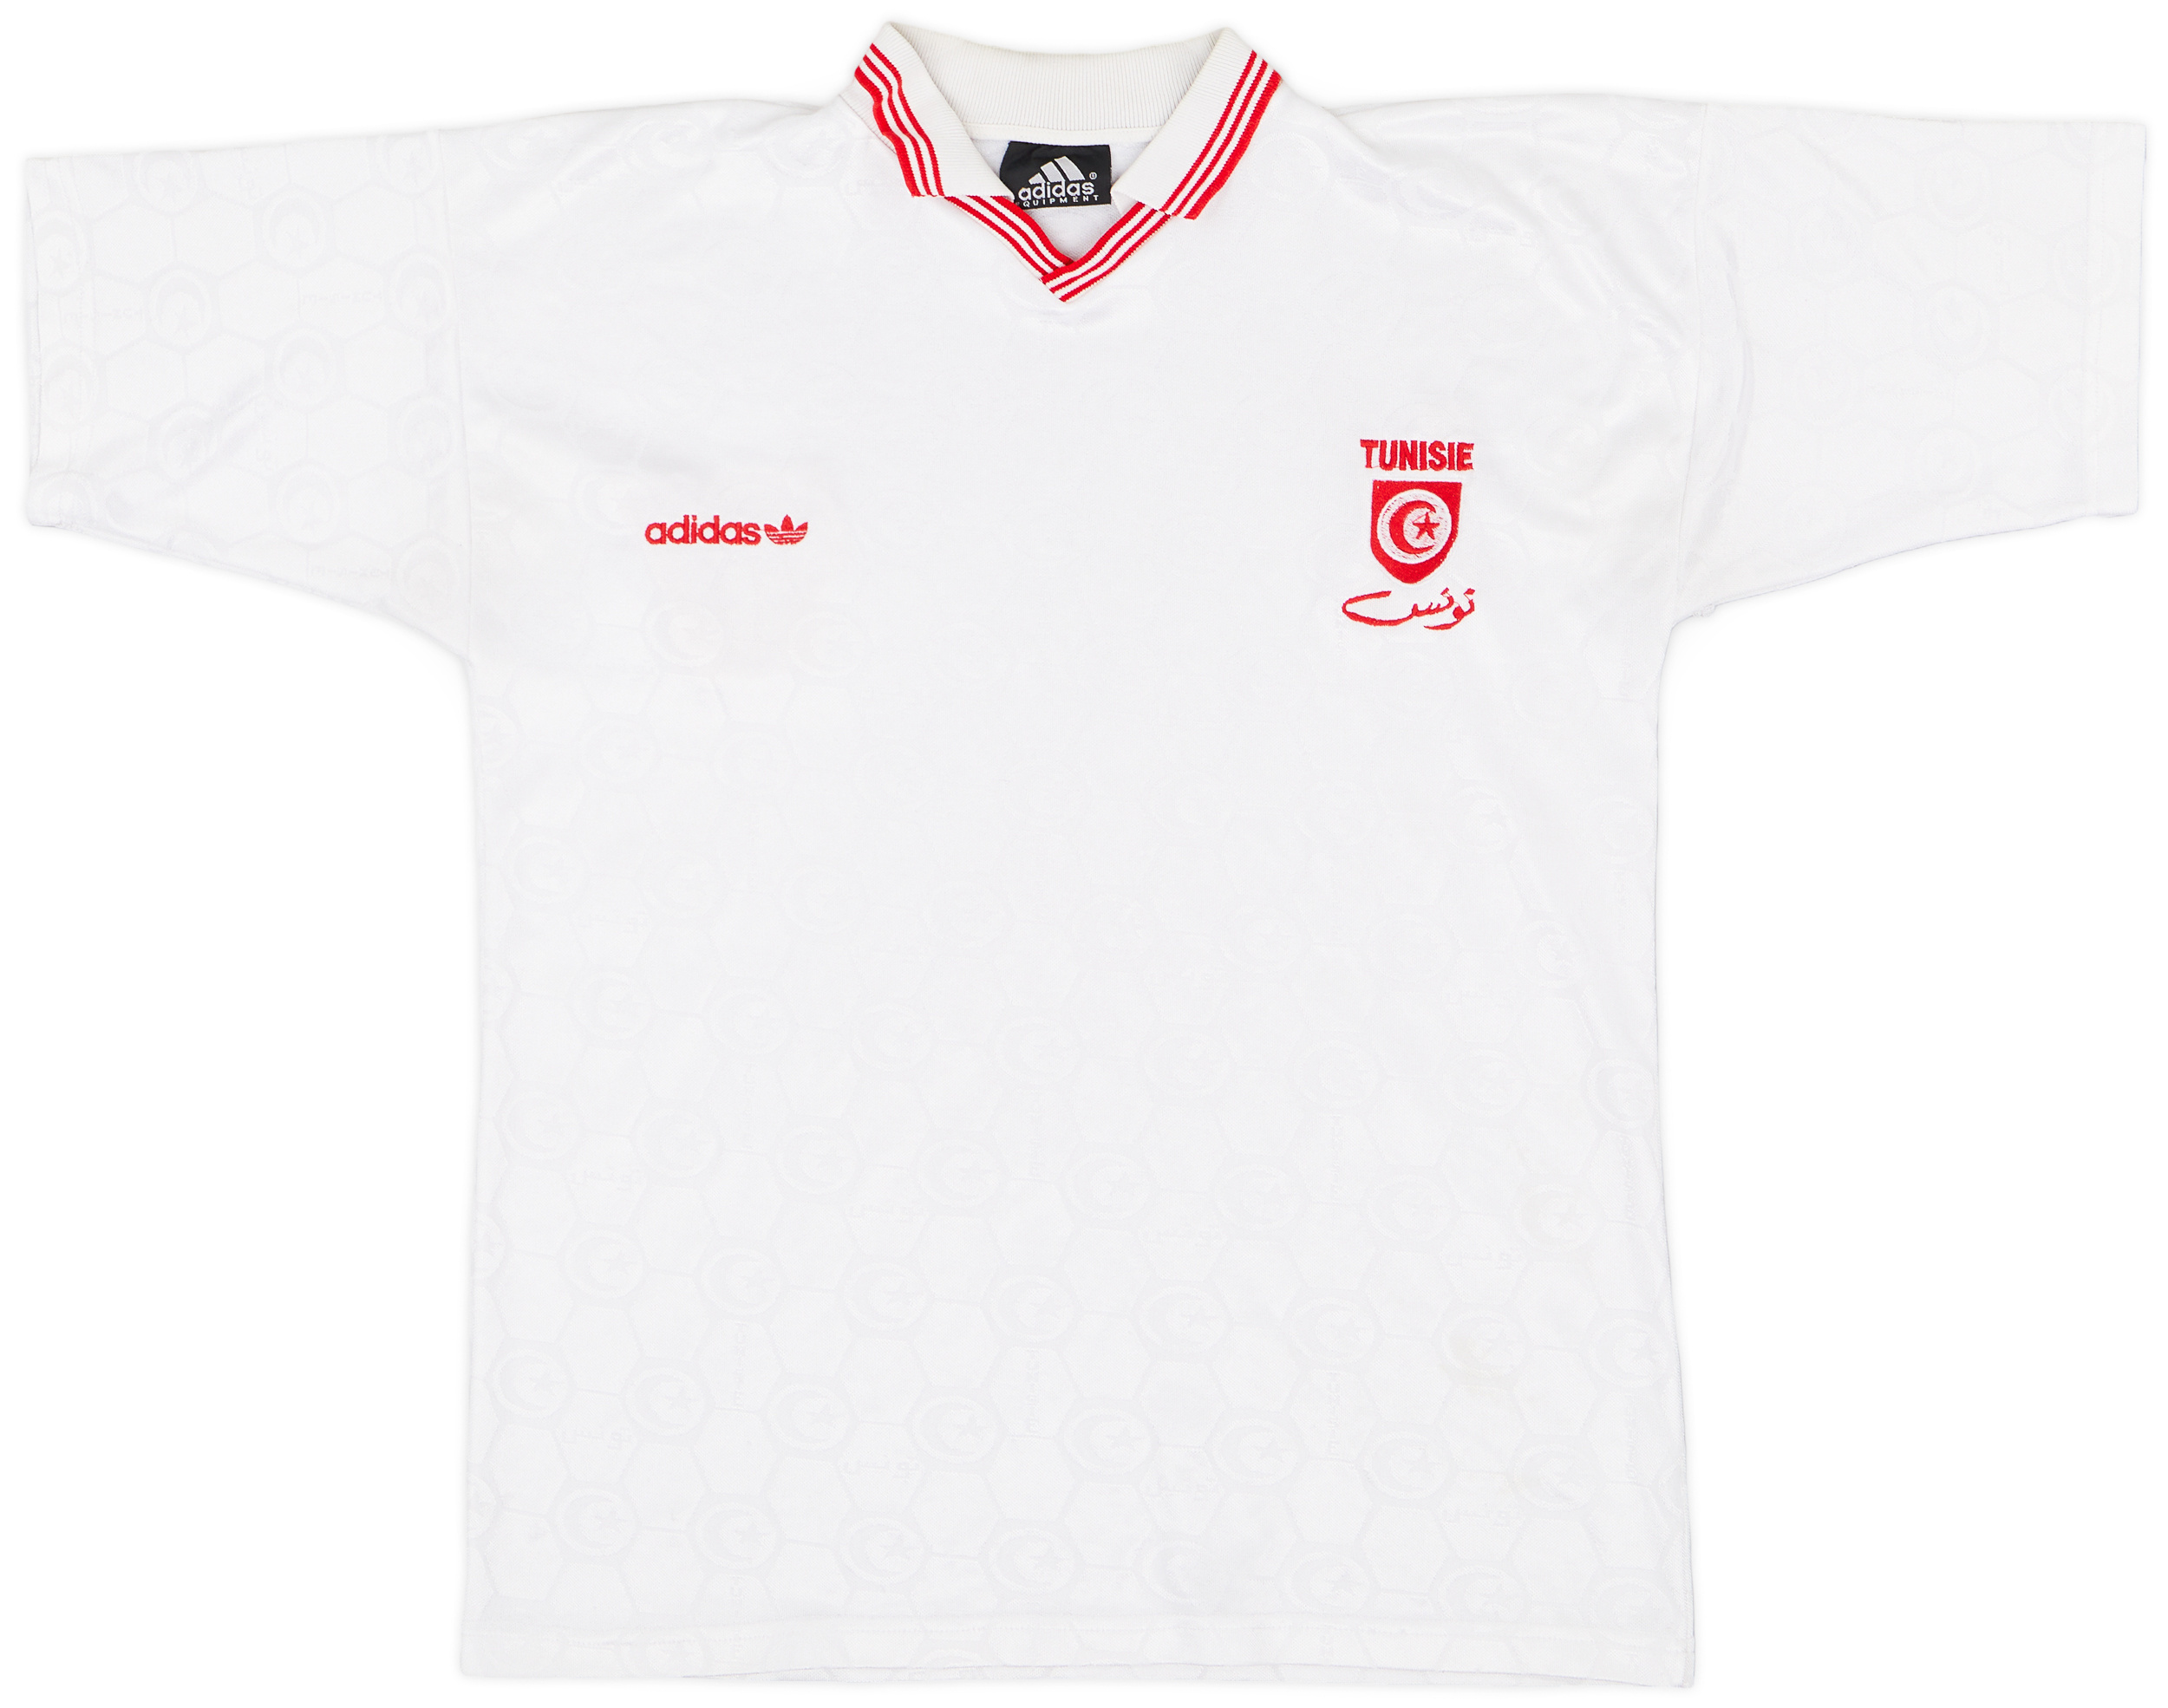 1992 Tunisia adidas Fan Shirt - 9/10 - ()